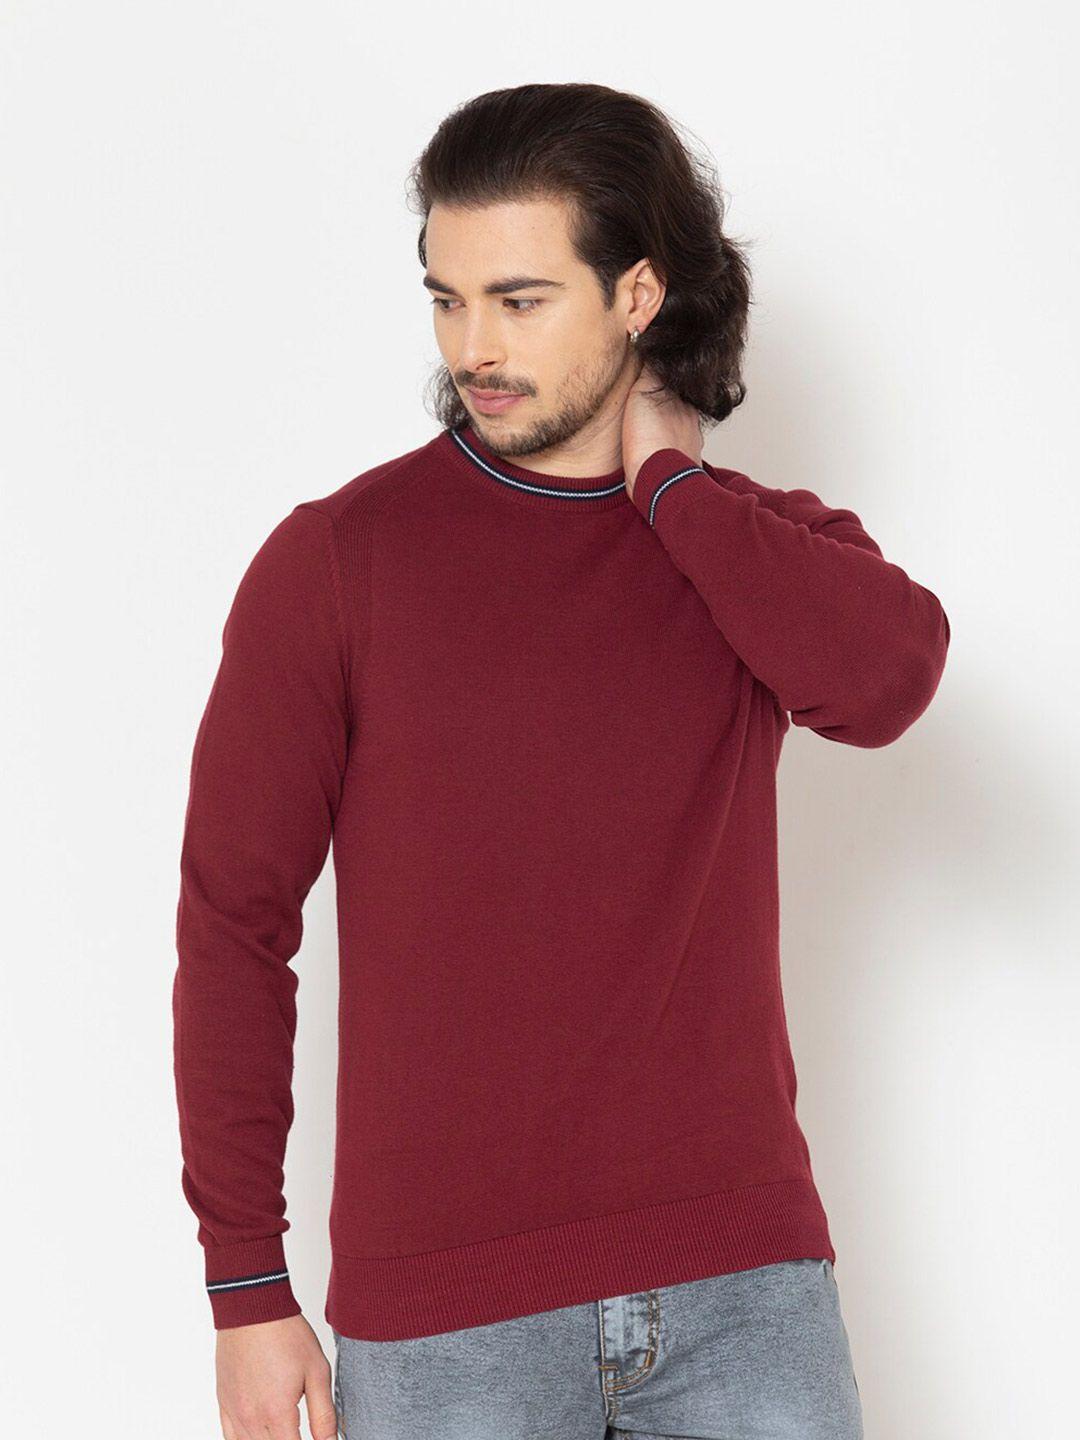 allen-cooper-men-solid-pullover-cotton-sweater